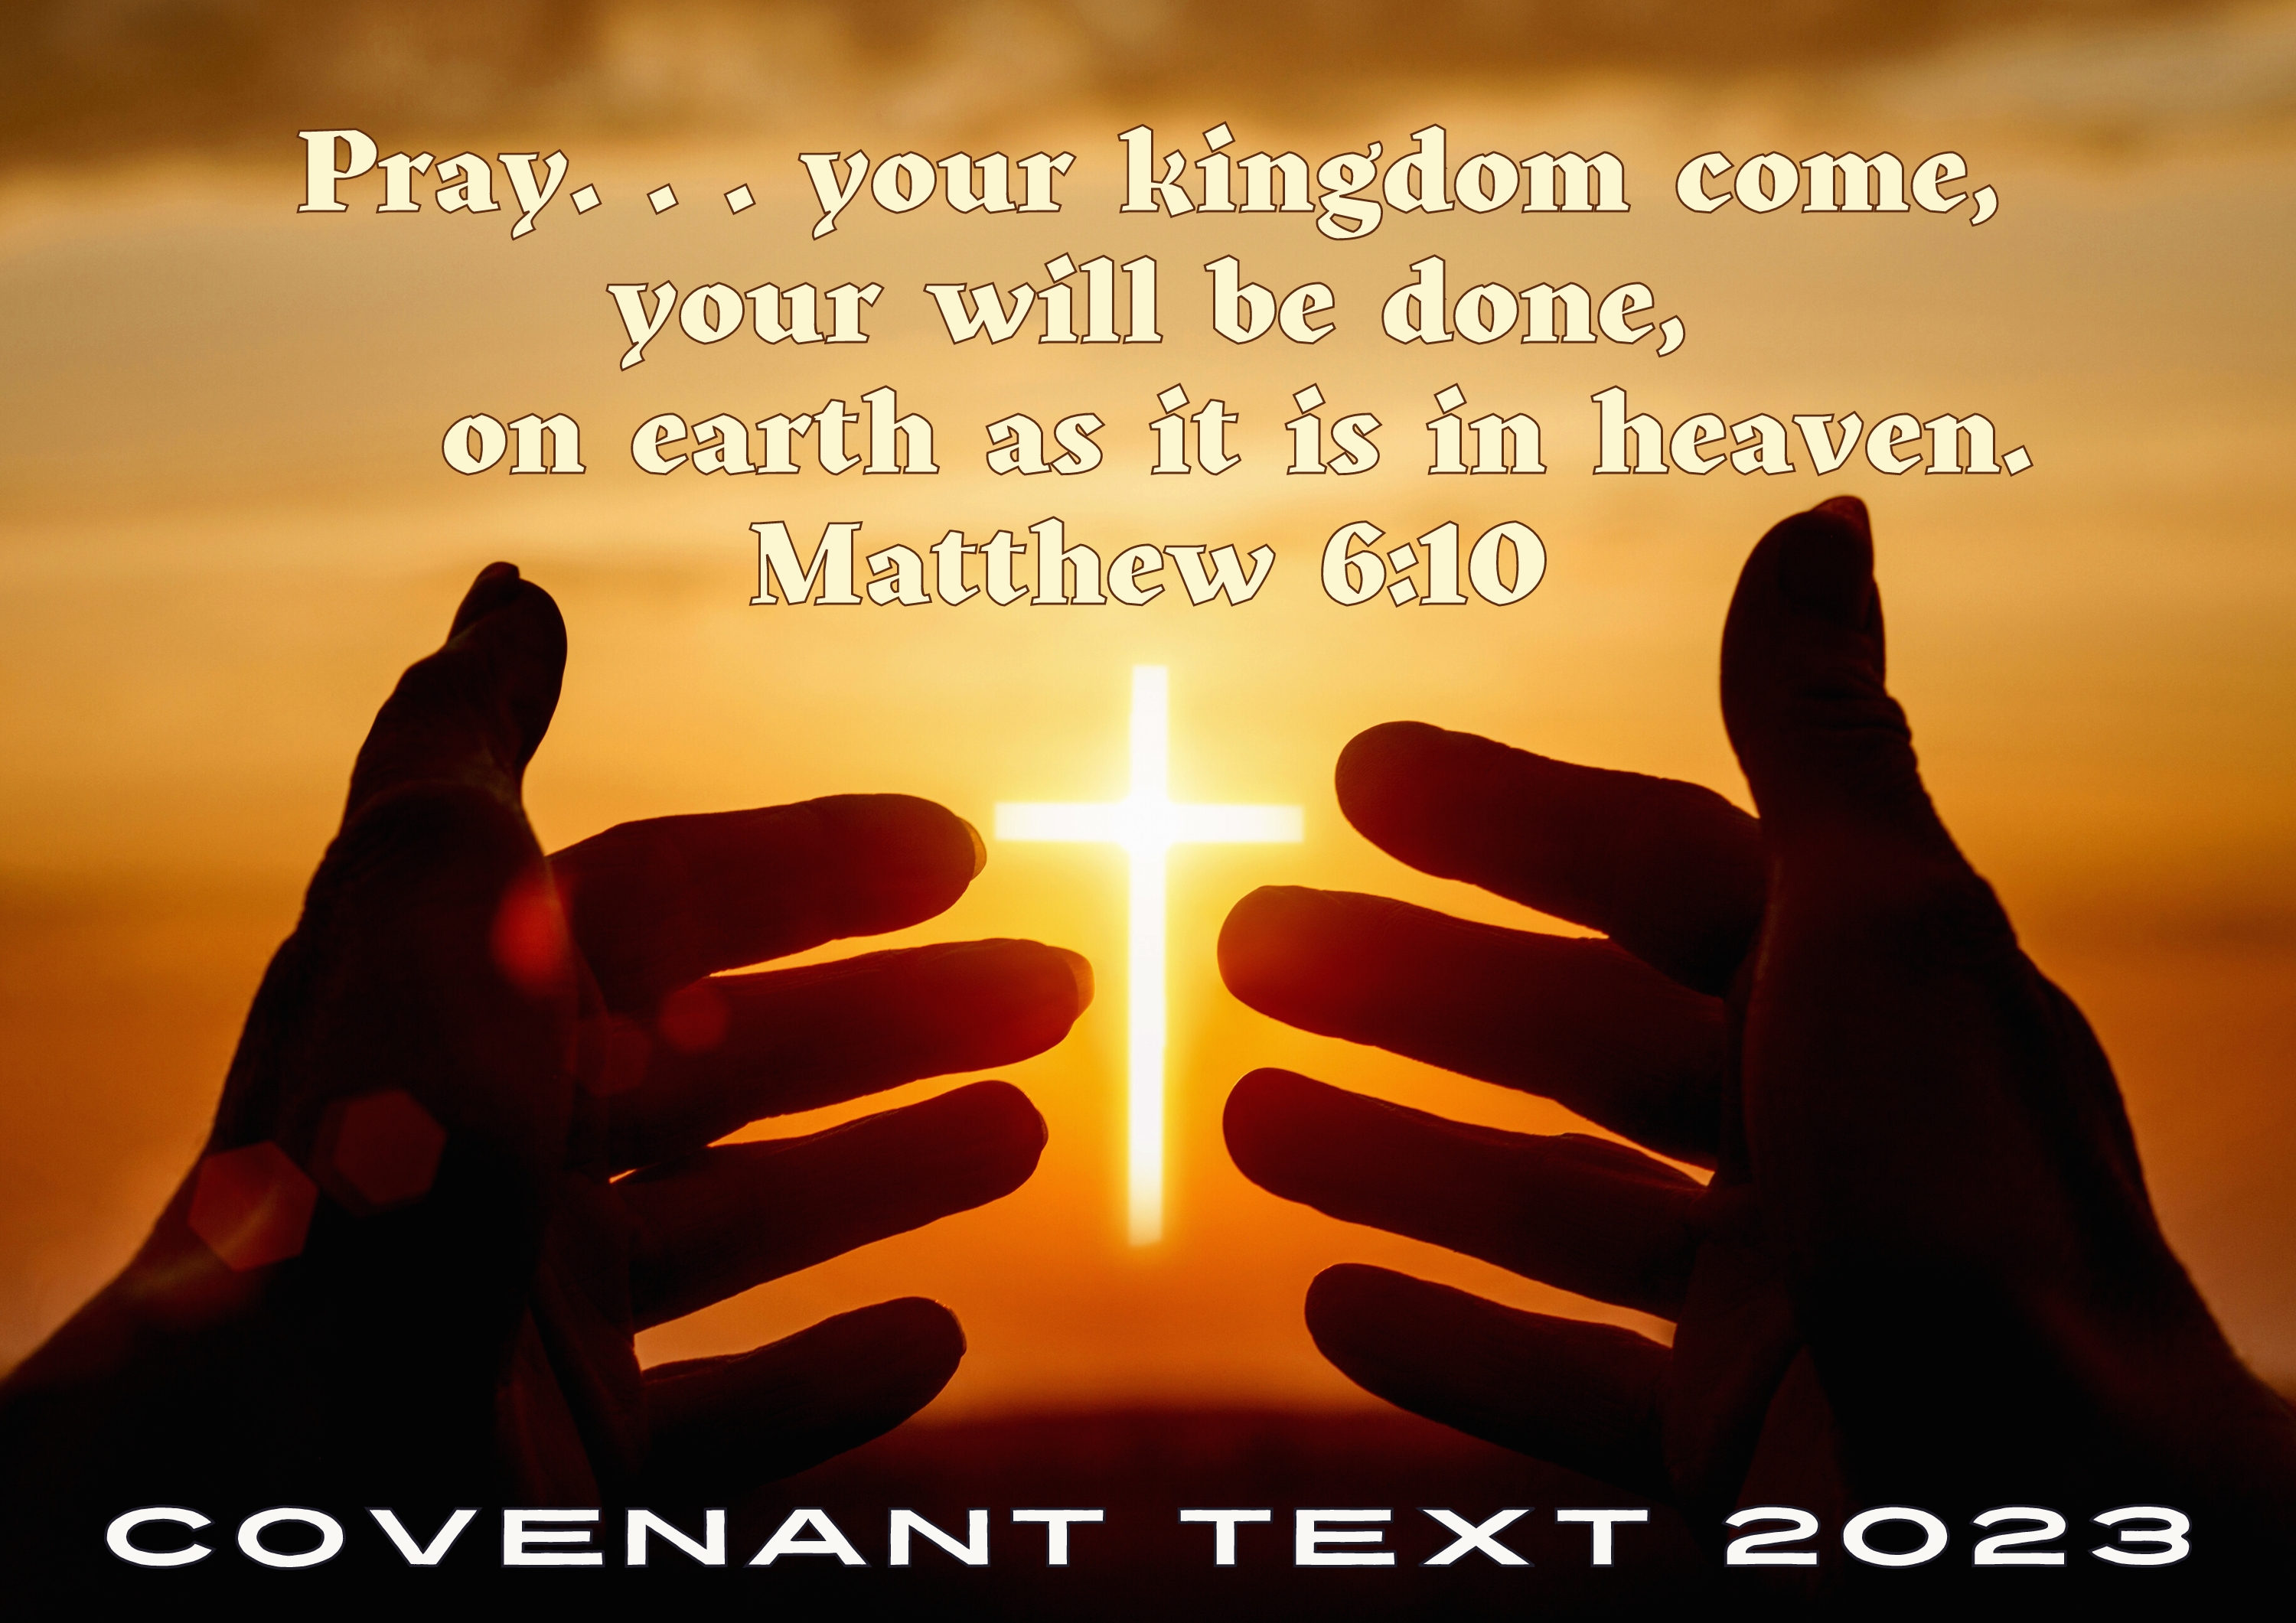 Covenant Text 2023